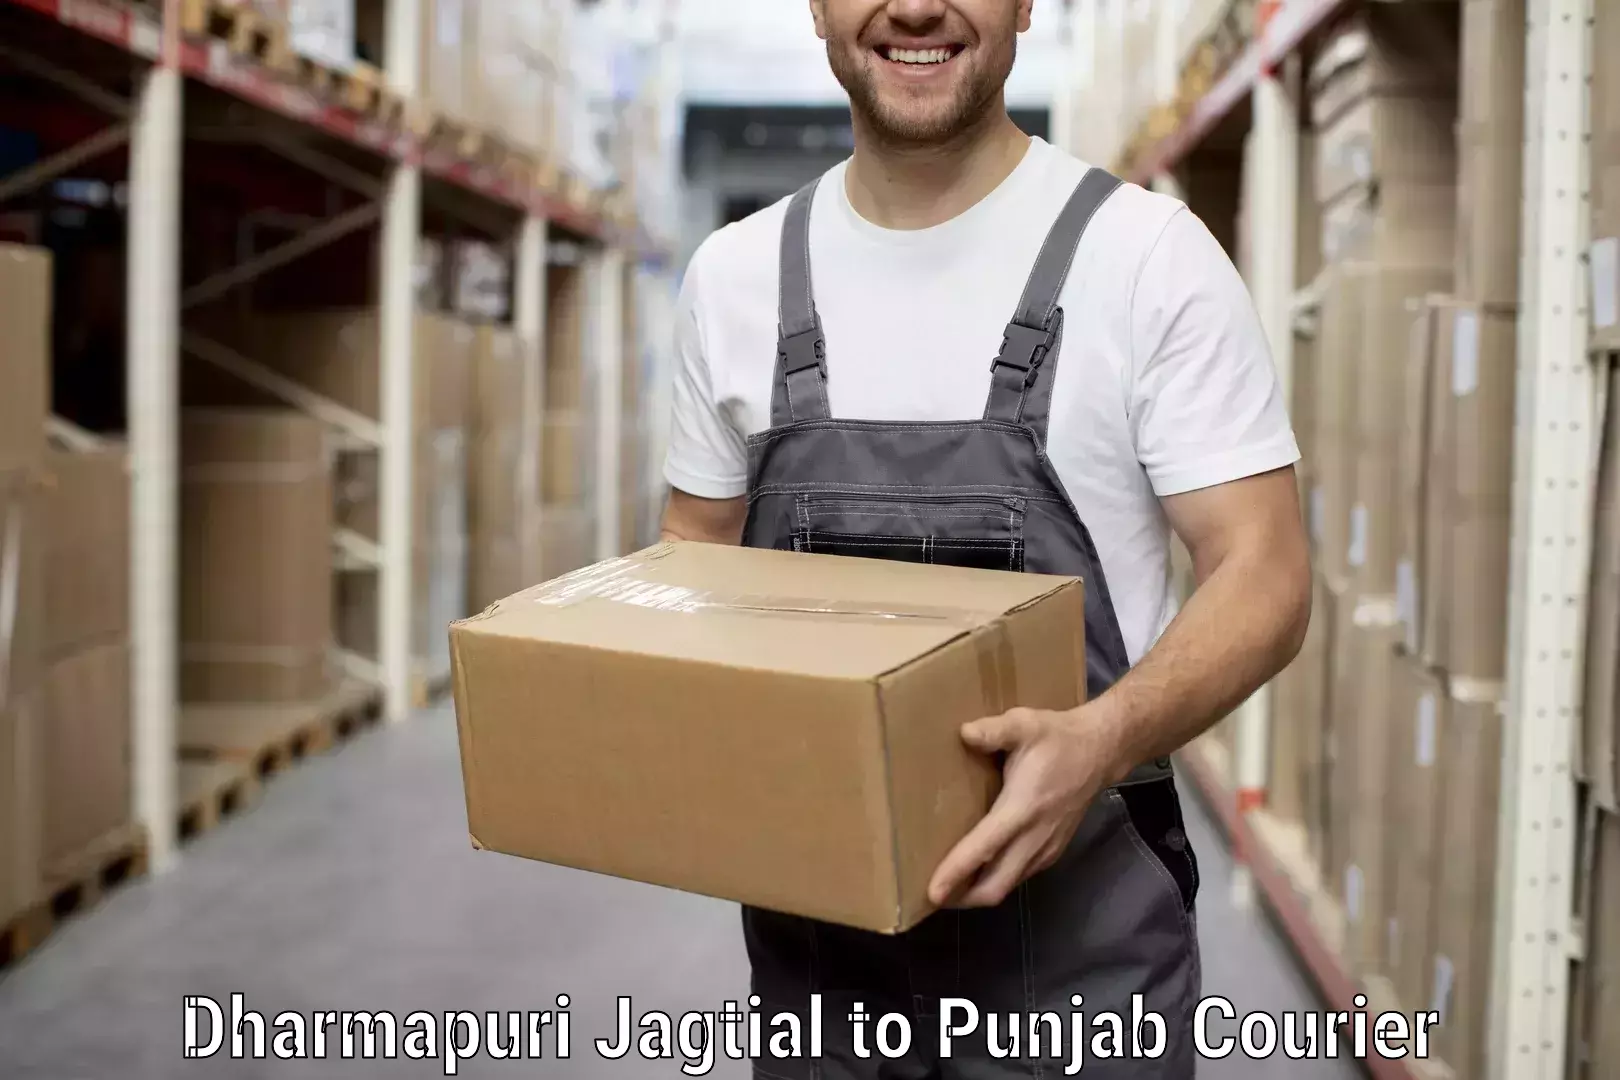 Furniture delivery service Dharmapuri Jagtial to Mansa